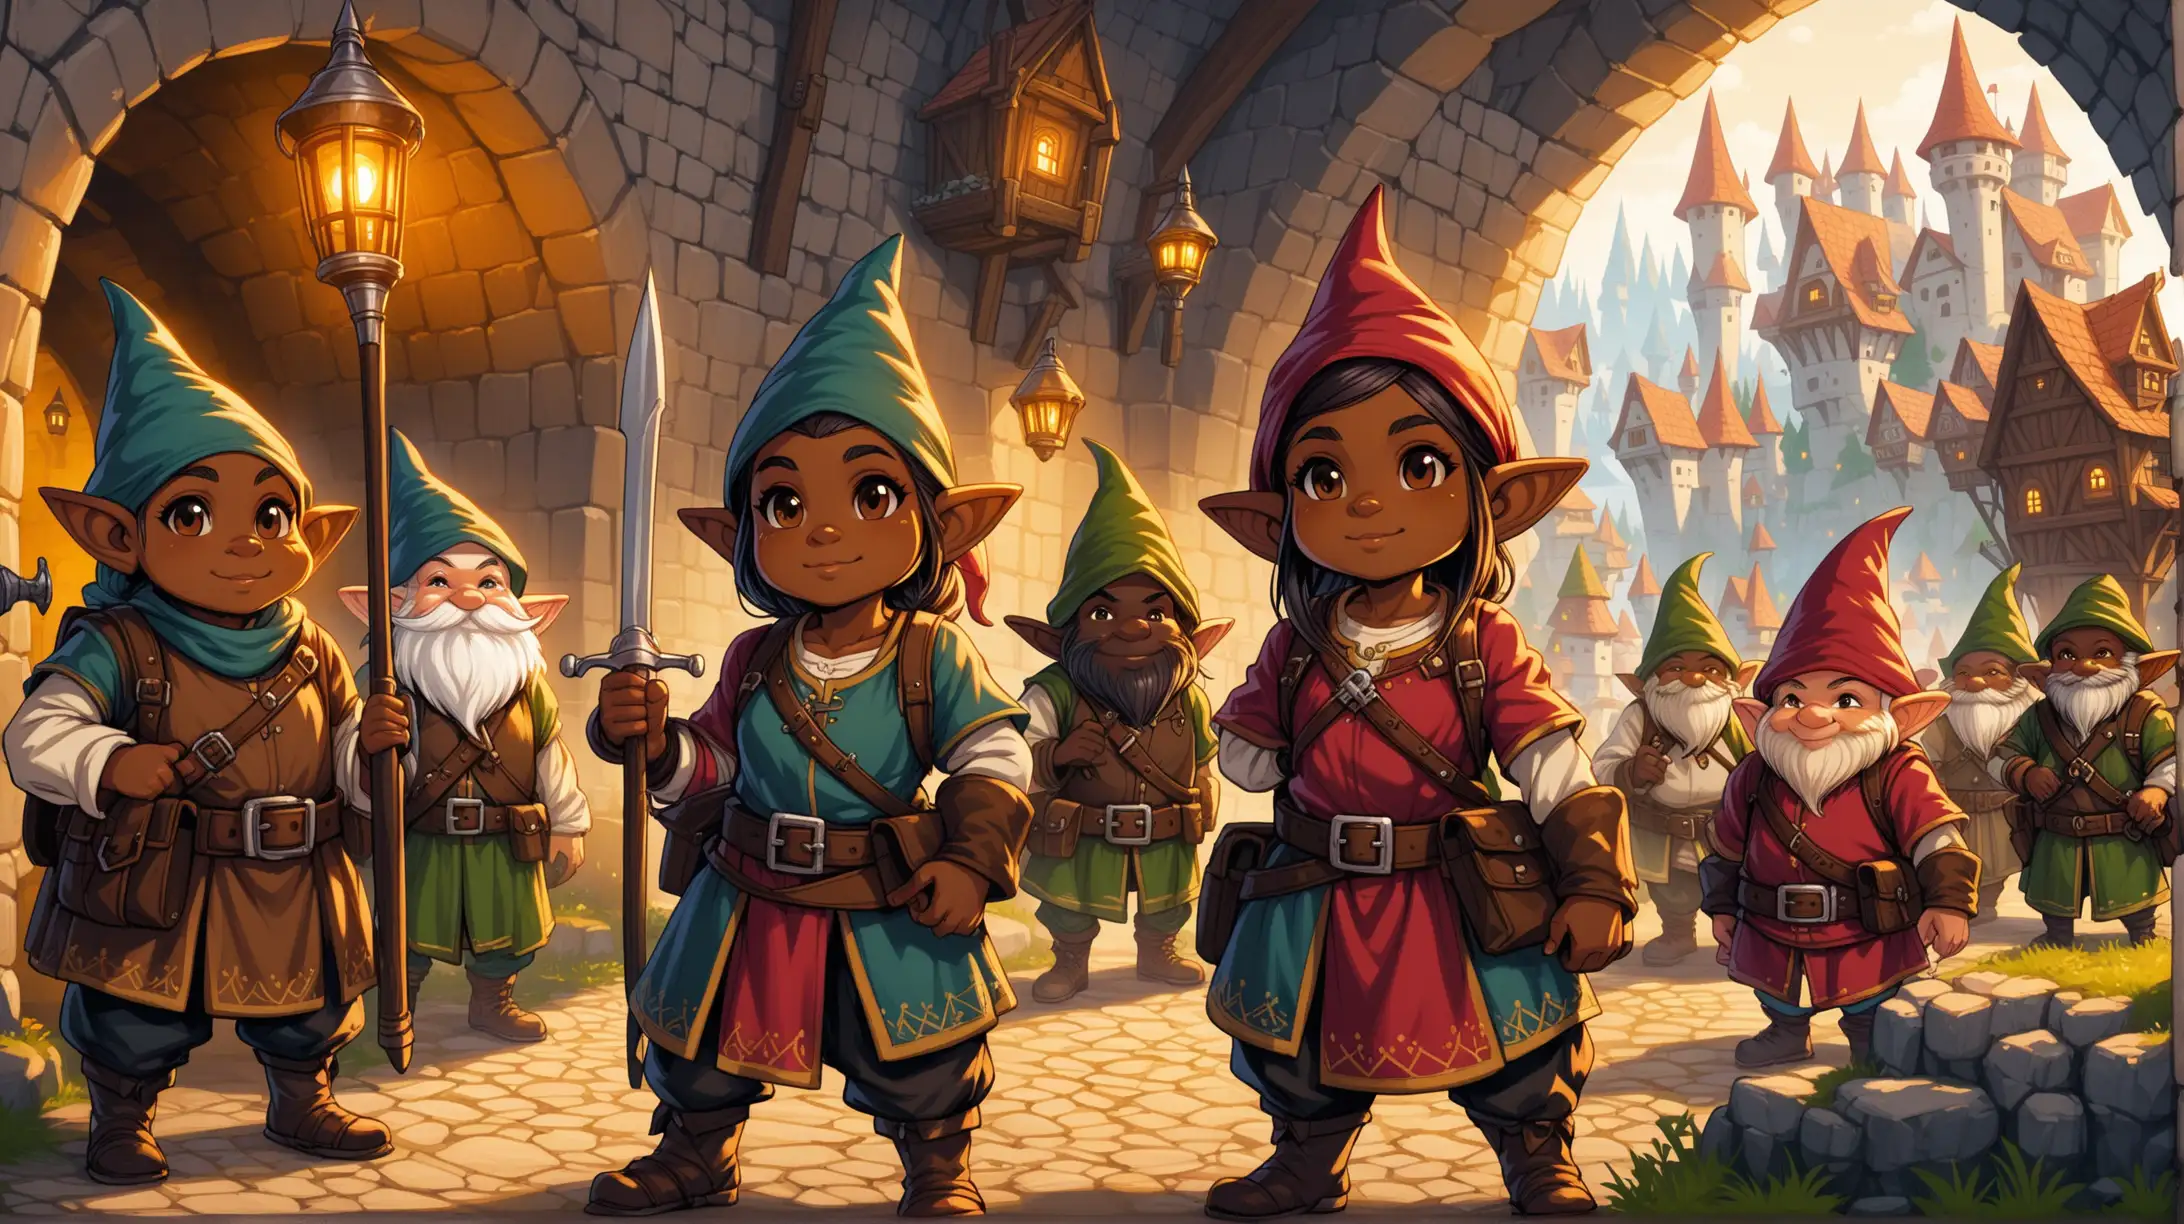 Medieval Fantasy Young Dark Skin Gnomes in an Underground City